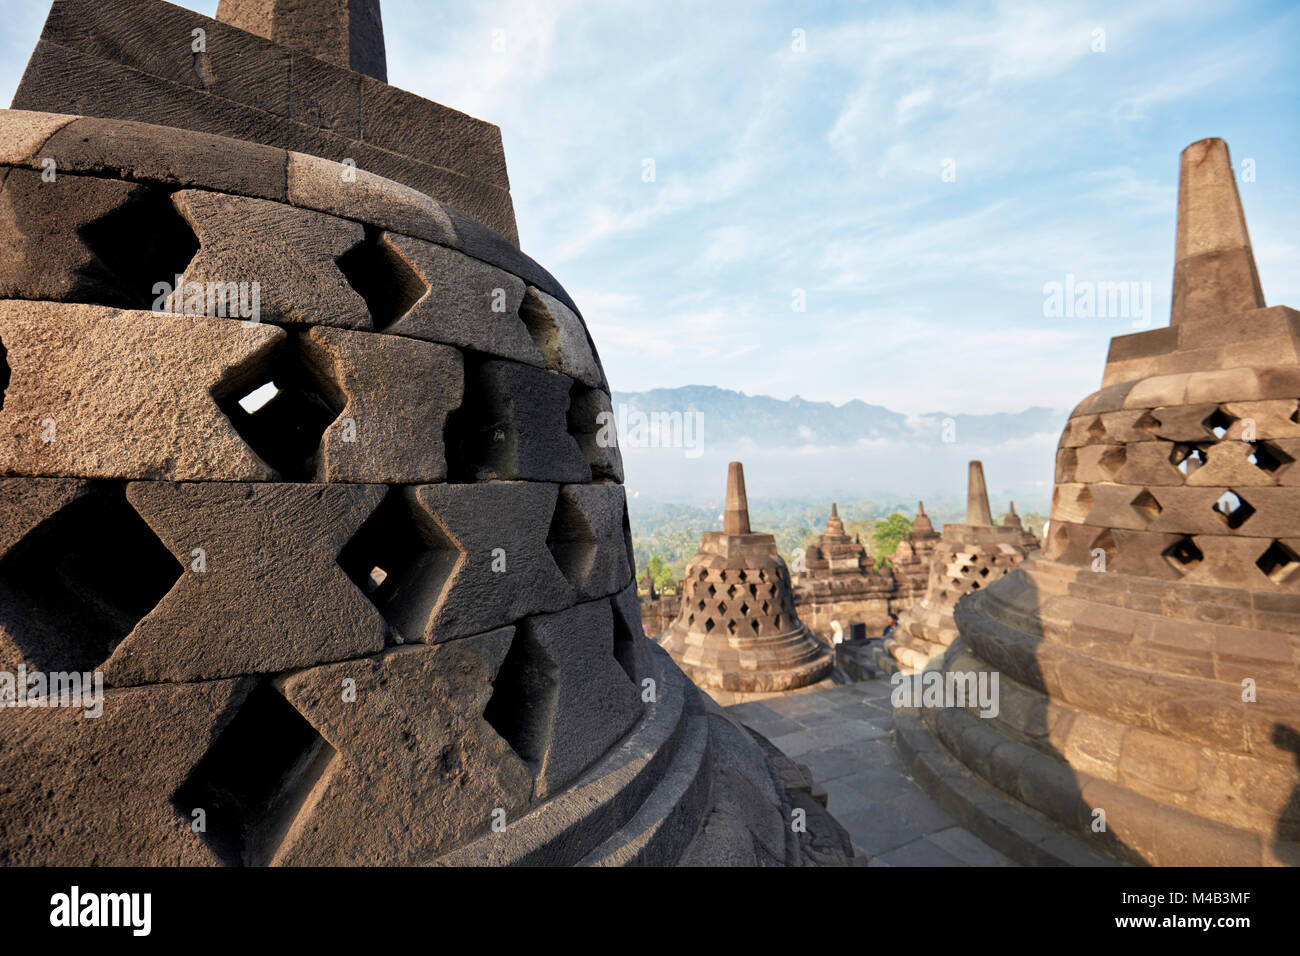 Rhombus durchlöcherte Stupas in Borobudur buddhistischen Tempel. Magelang Regency, Java, Indonesien. Stockfoto